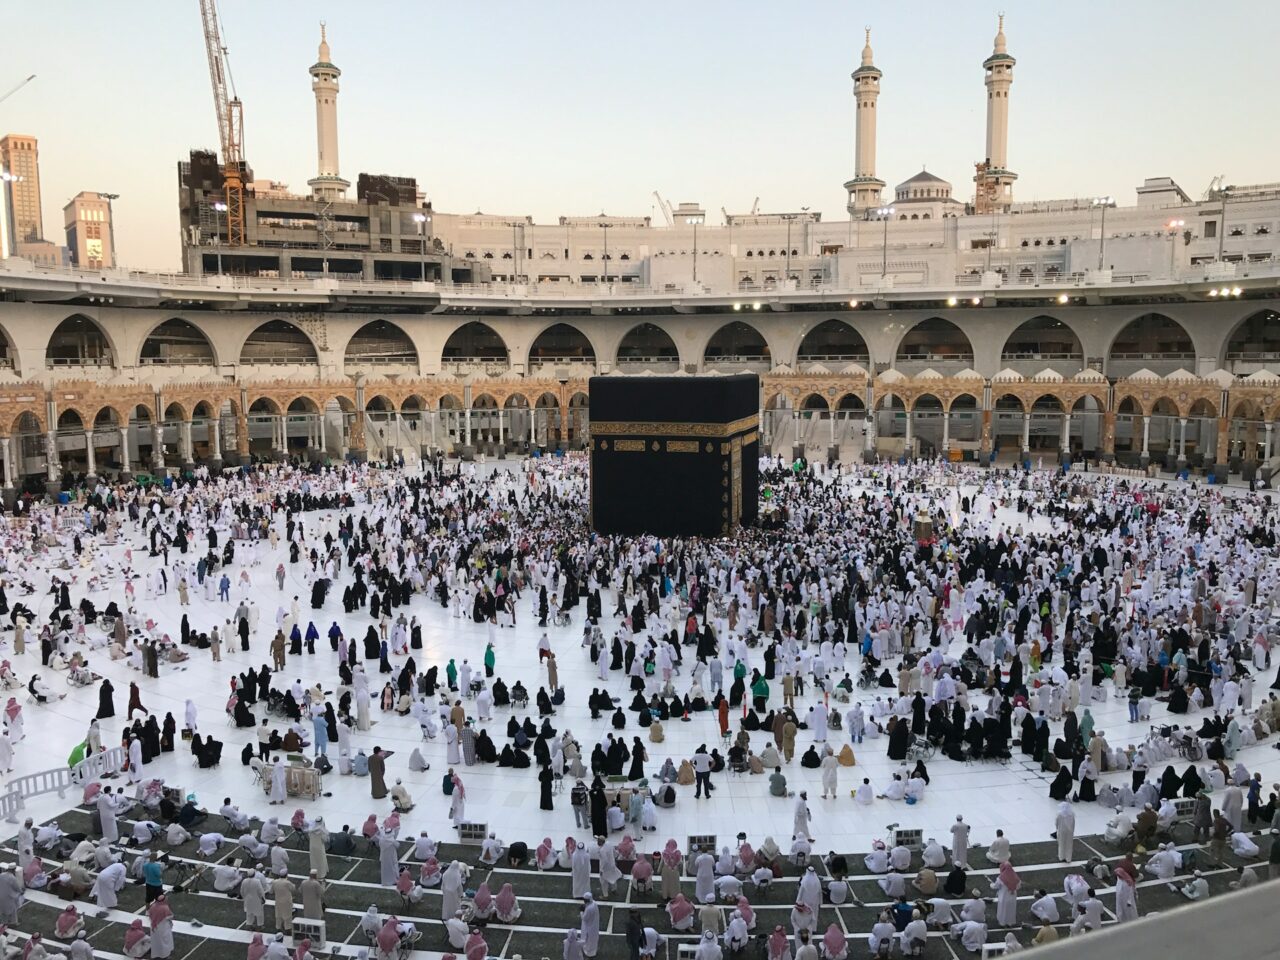 Crowds of people at Mecca in Saudi Arabia